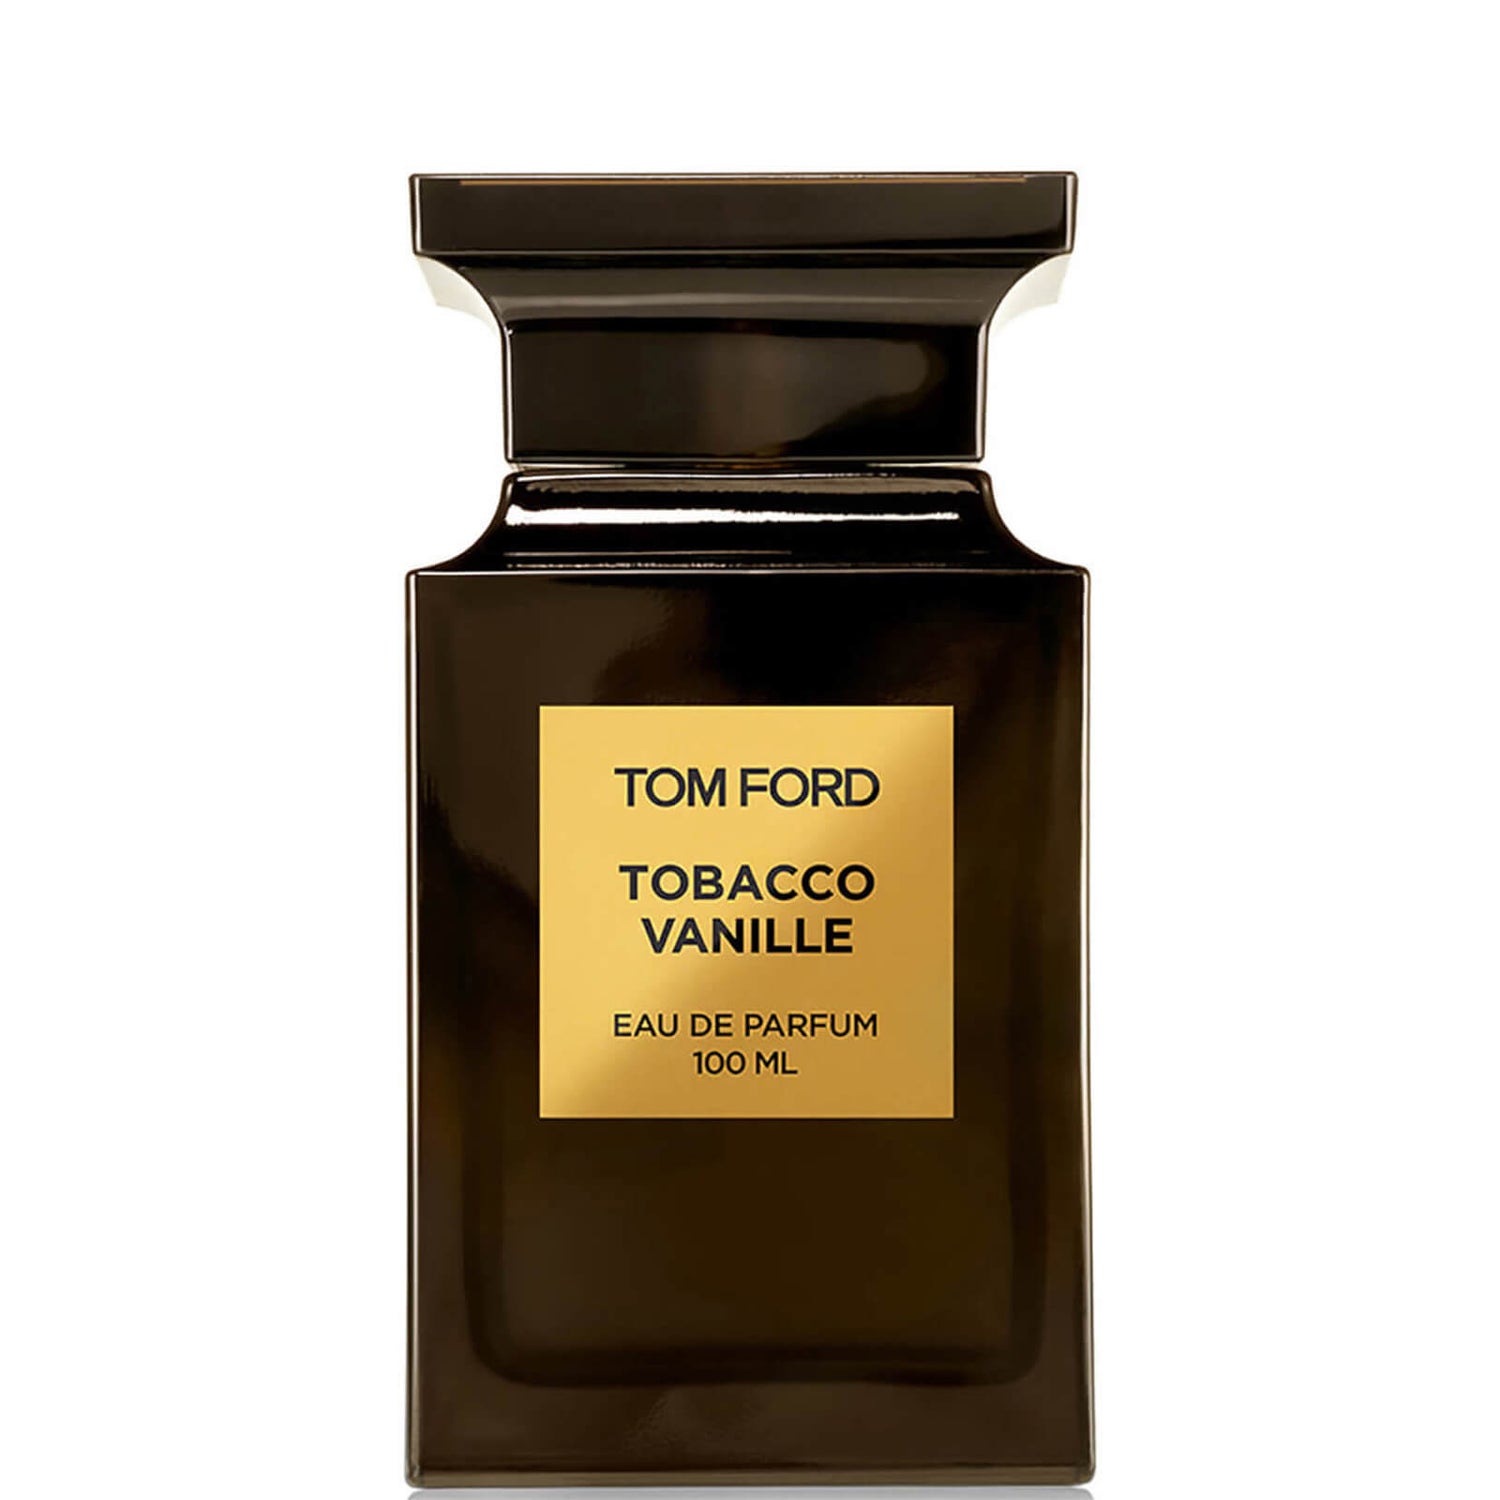 Tom Ford Tobacco Vanille Eau de Parfum Spray - 100 ml